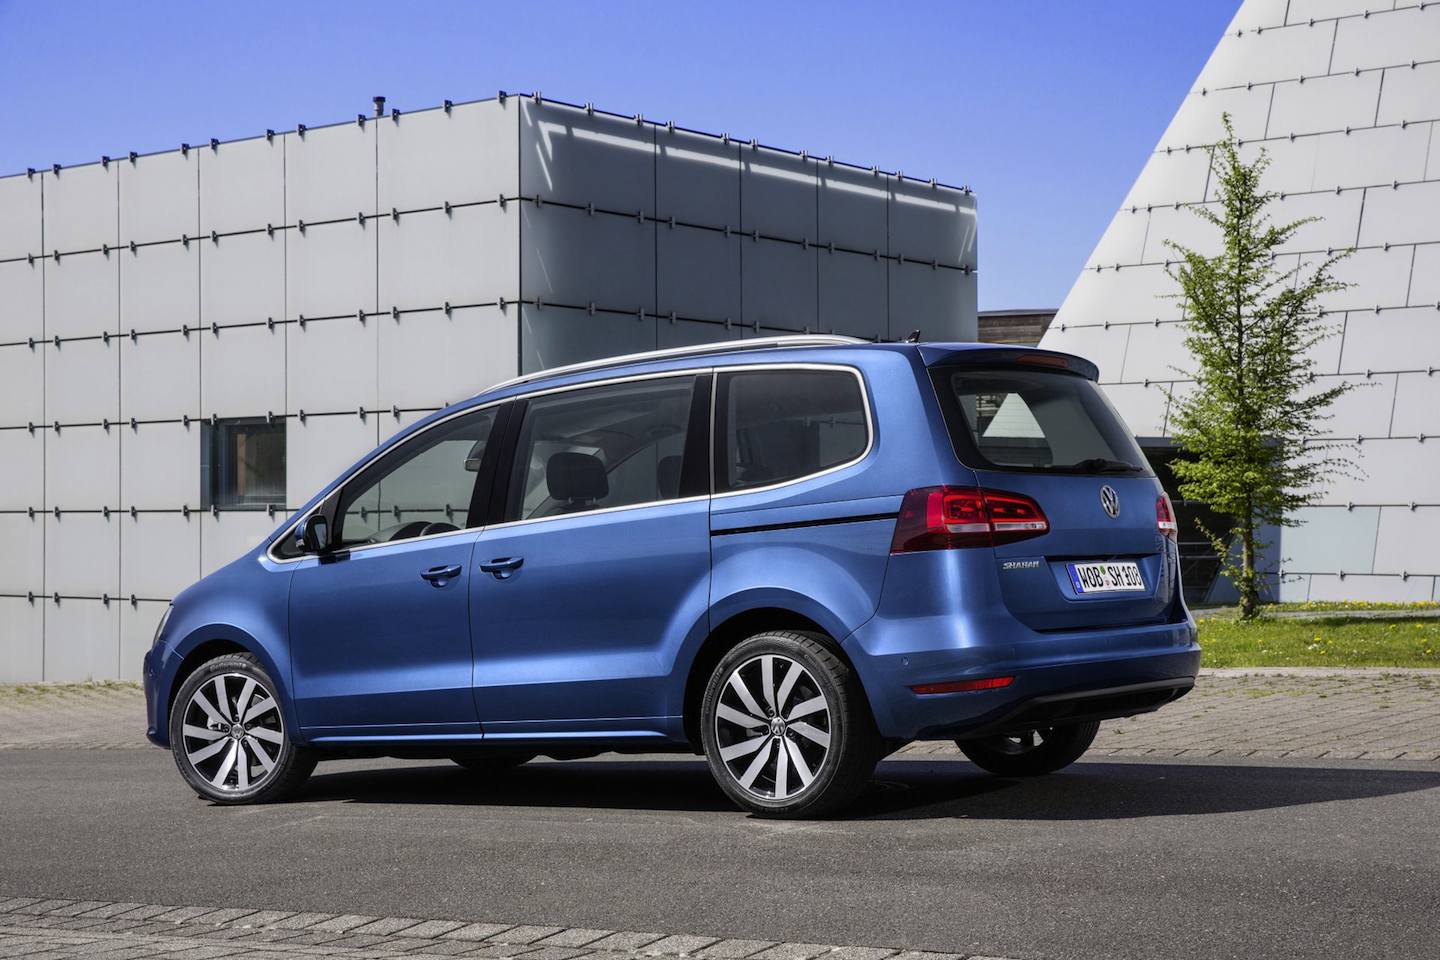 Volkswagen-Sharan 2015 lateral